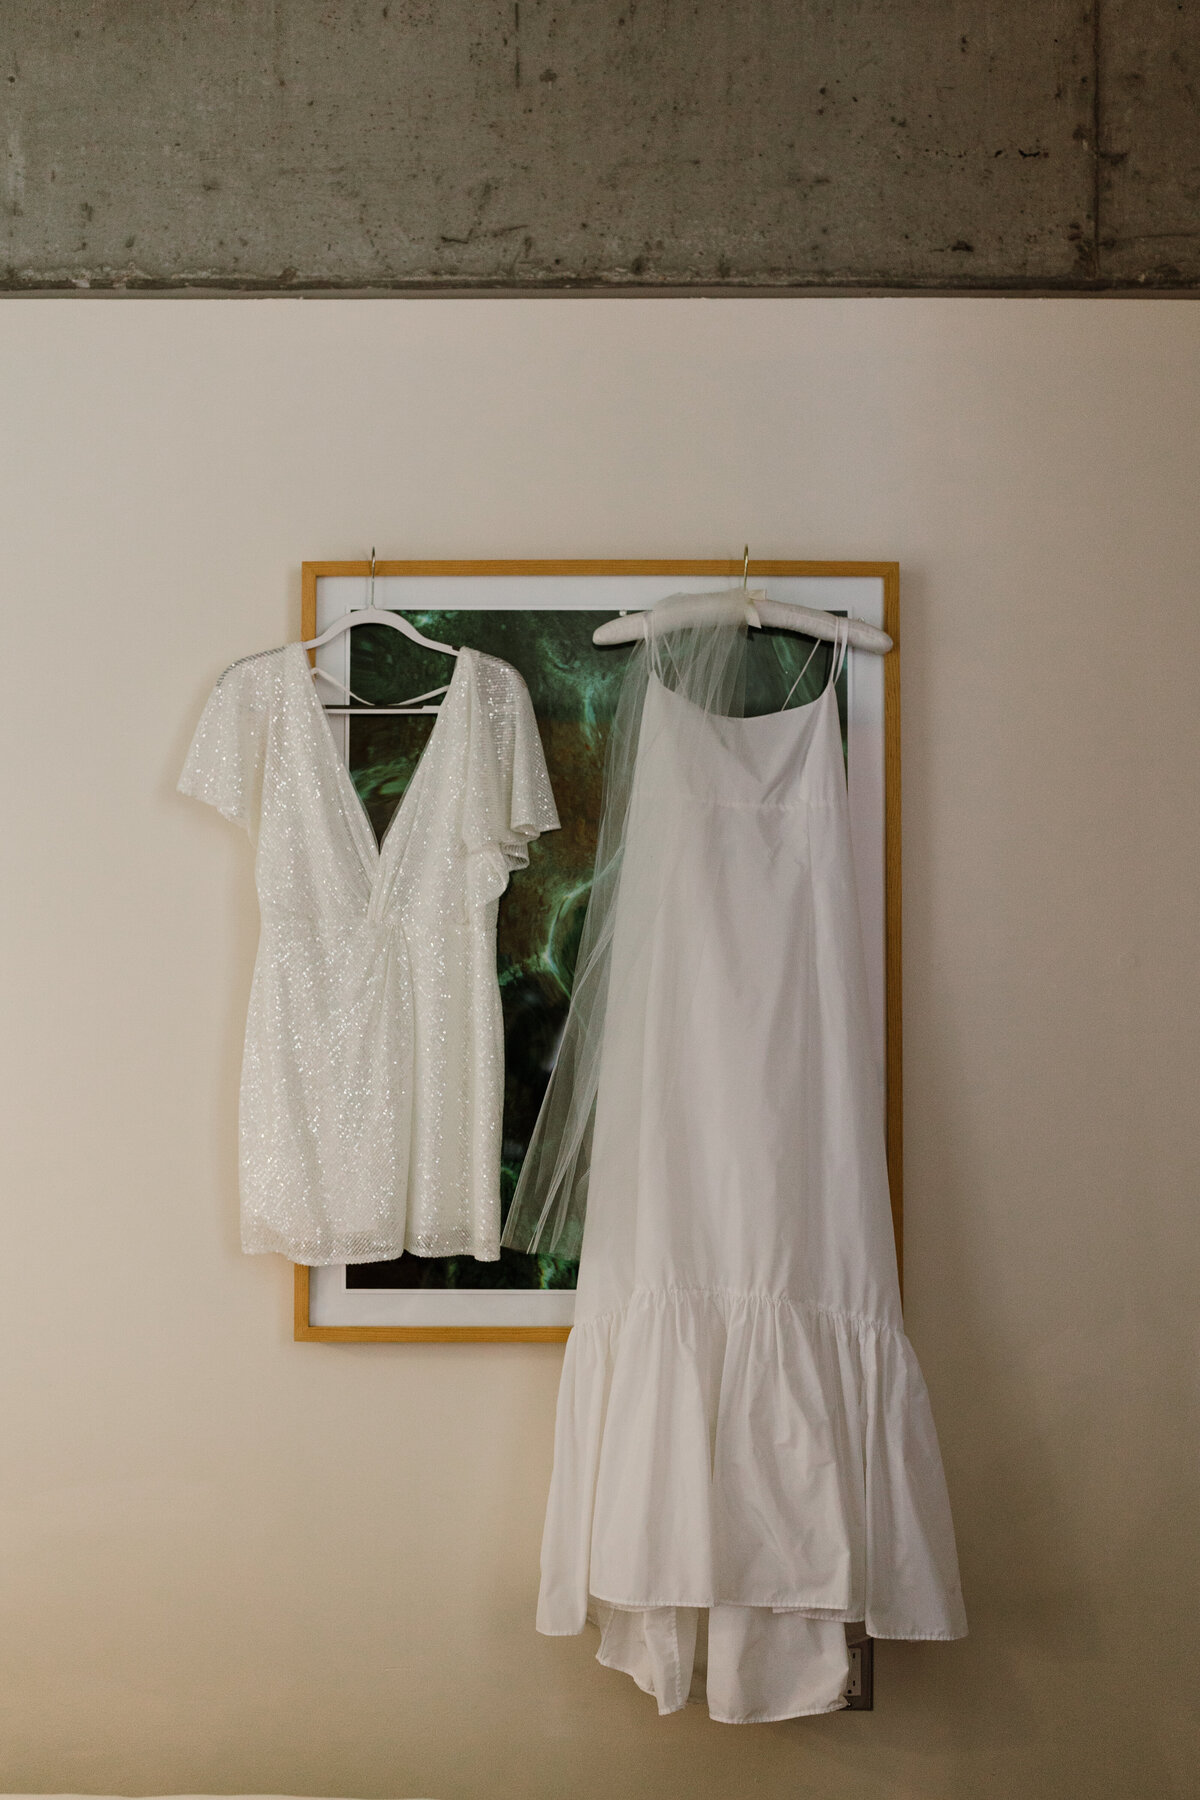 Wedding dresses hung up at Carpenter hotel, Austin